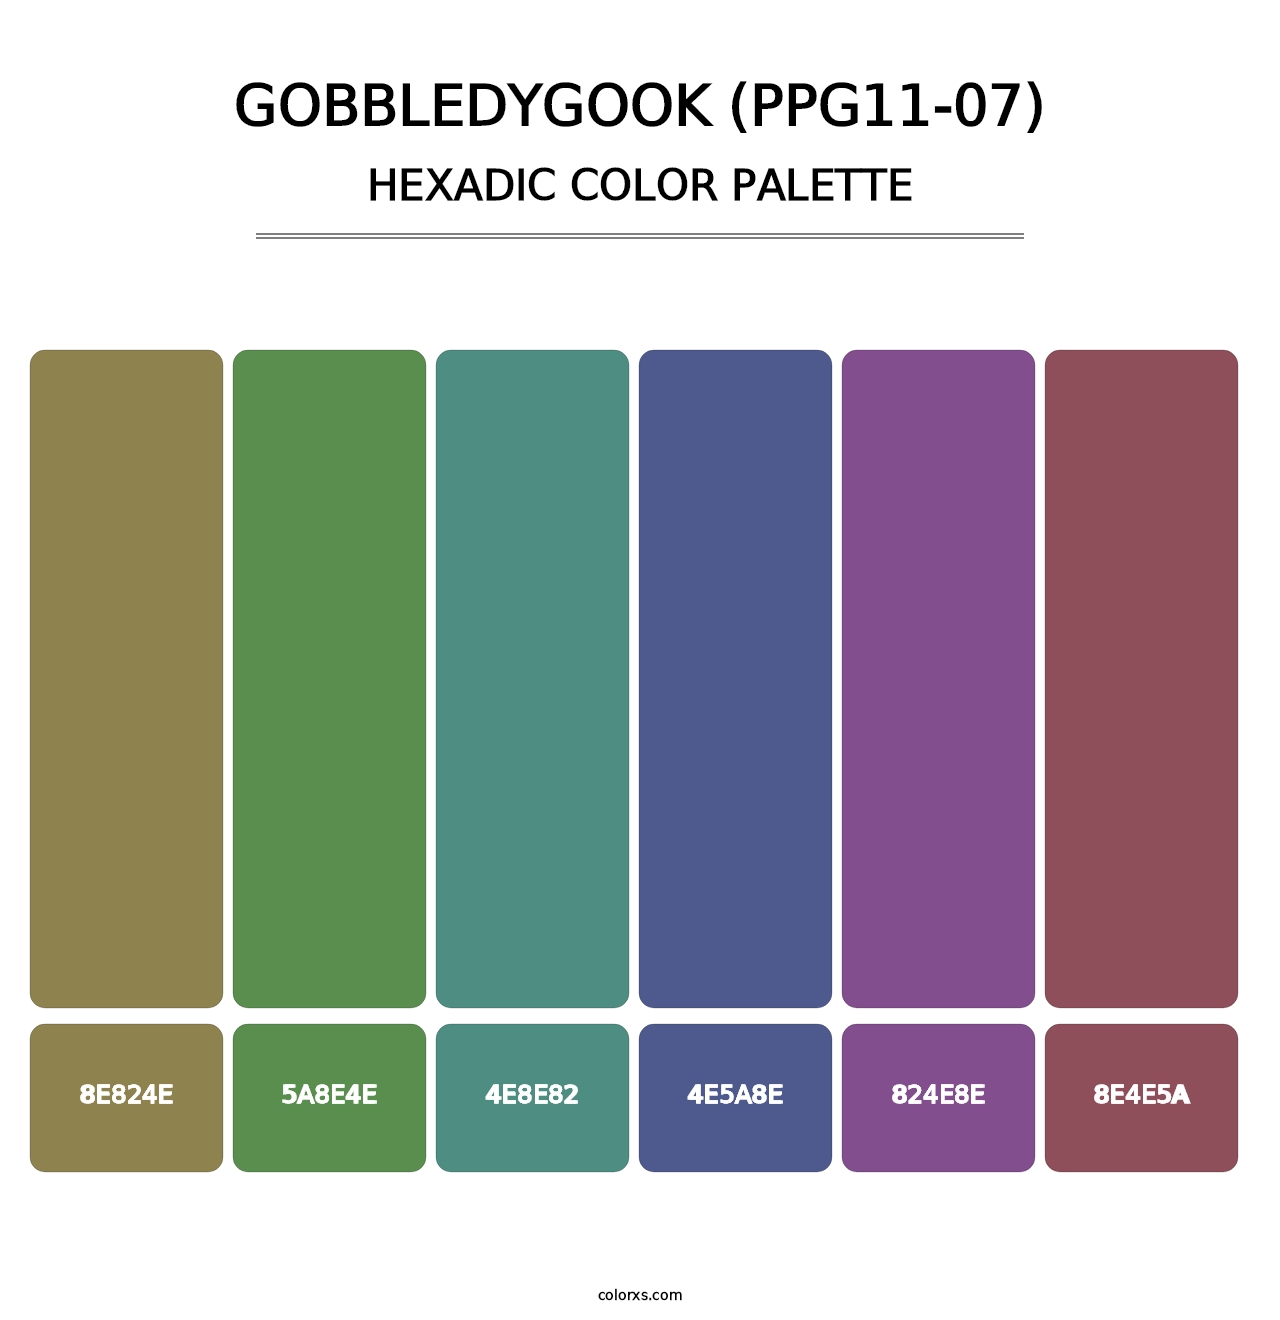 Gobbledygook (PPG11-07) - Hexadic Color Palette